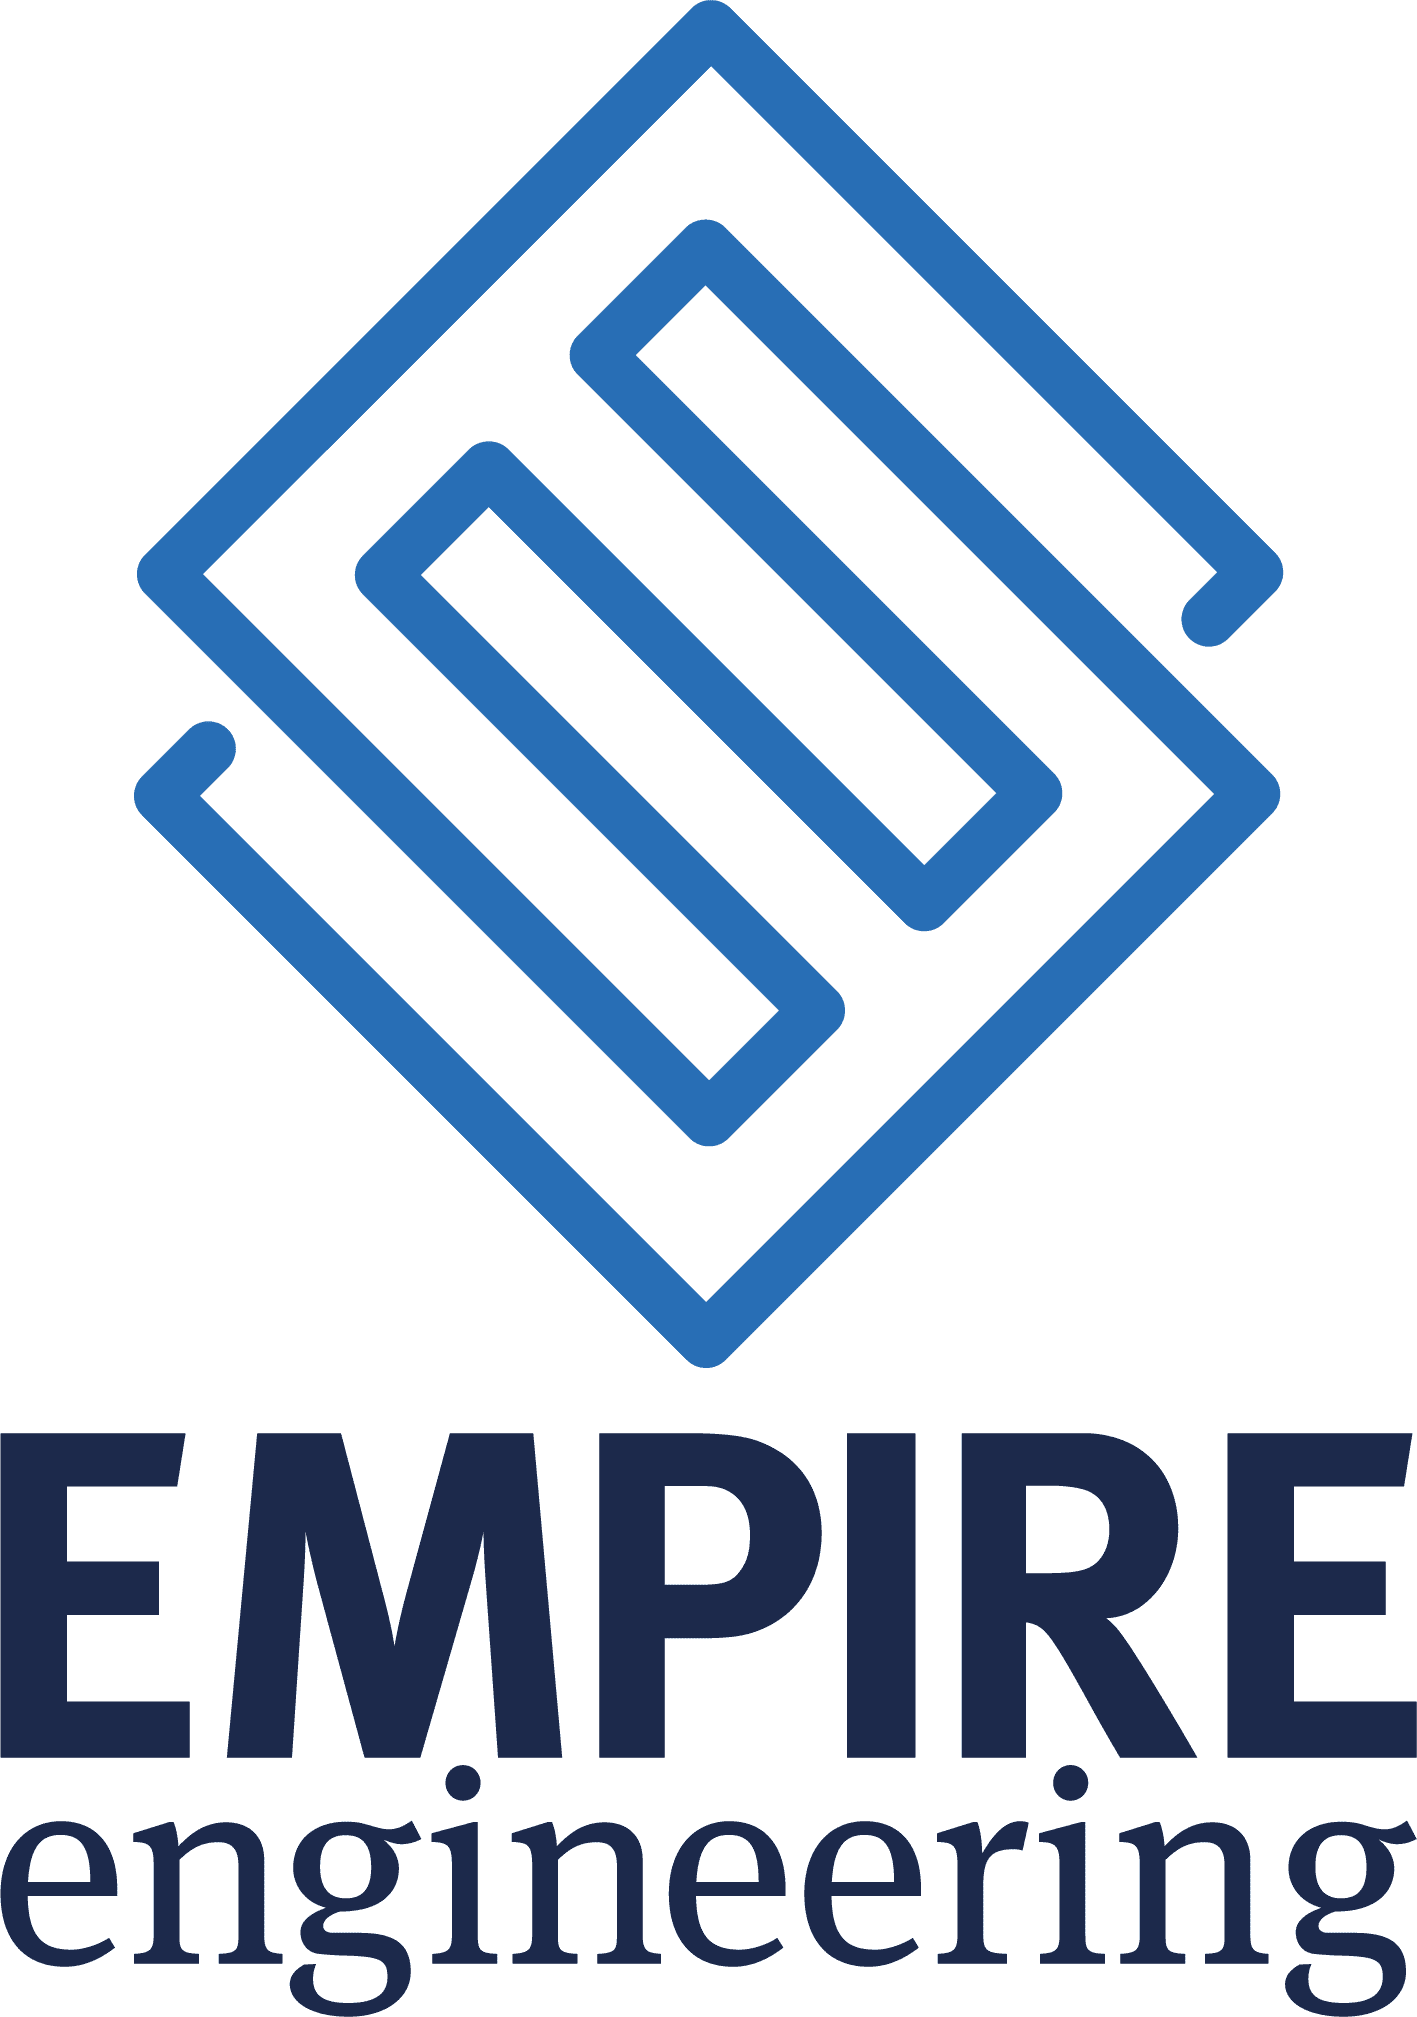 EmpireEngineering-FullColour.png